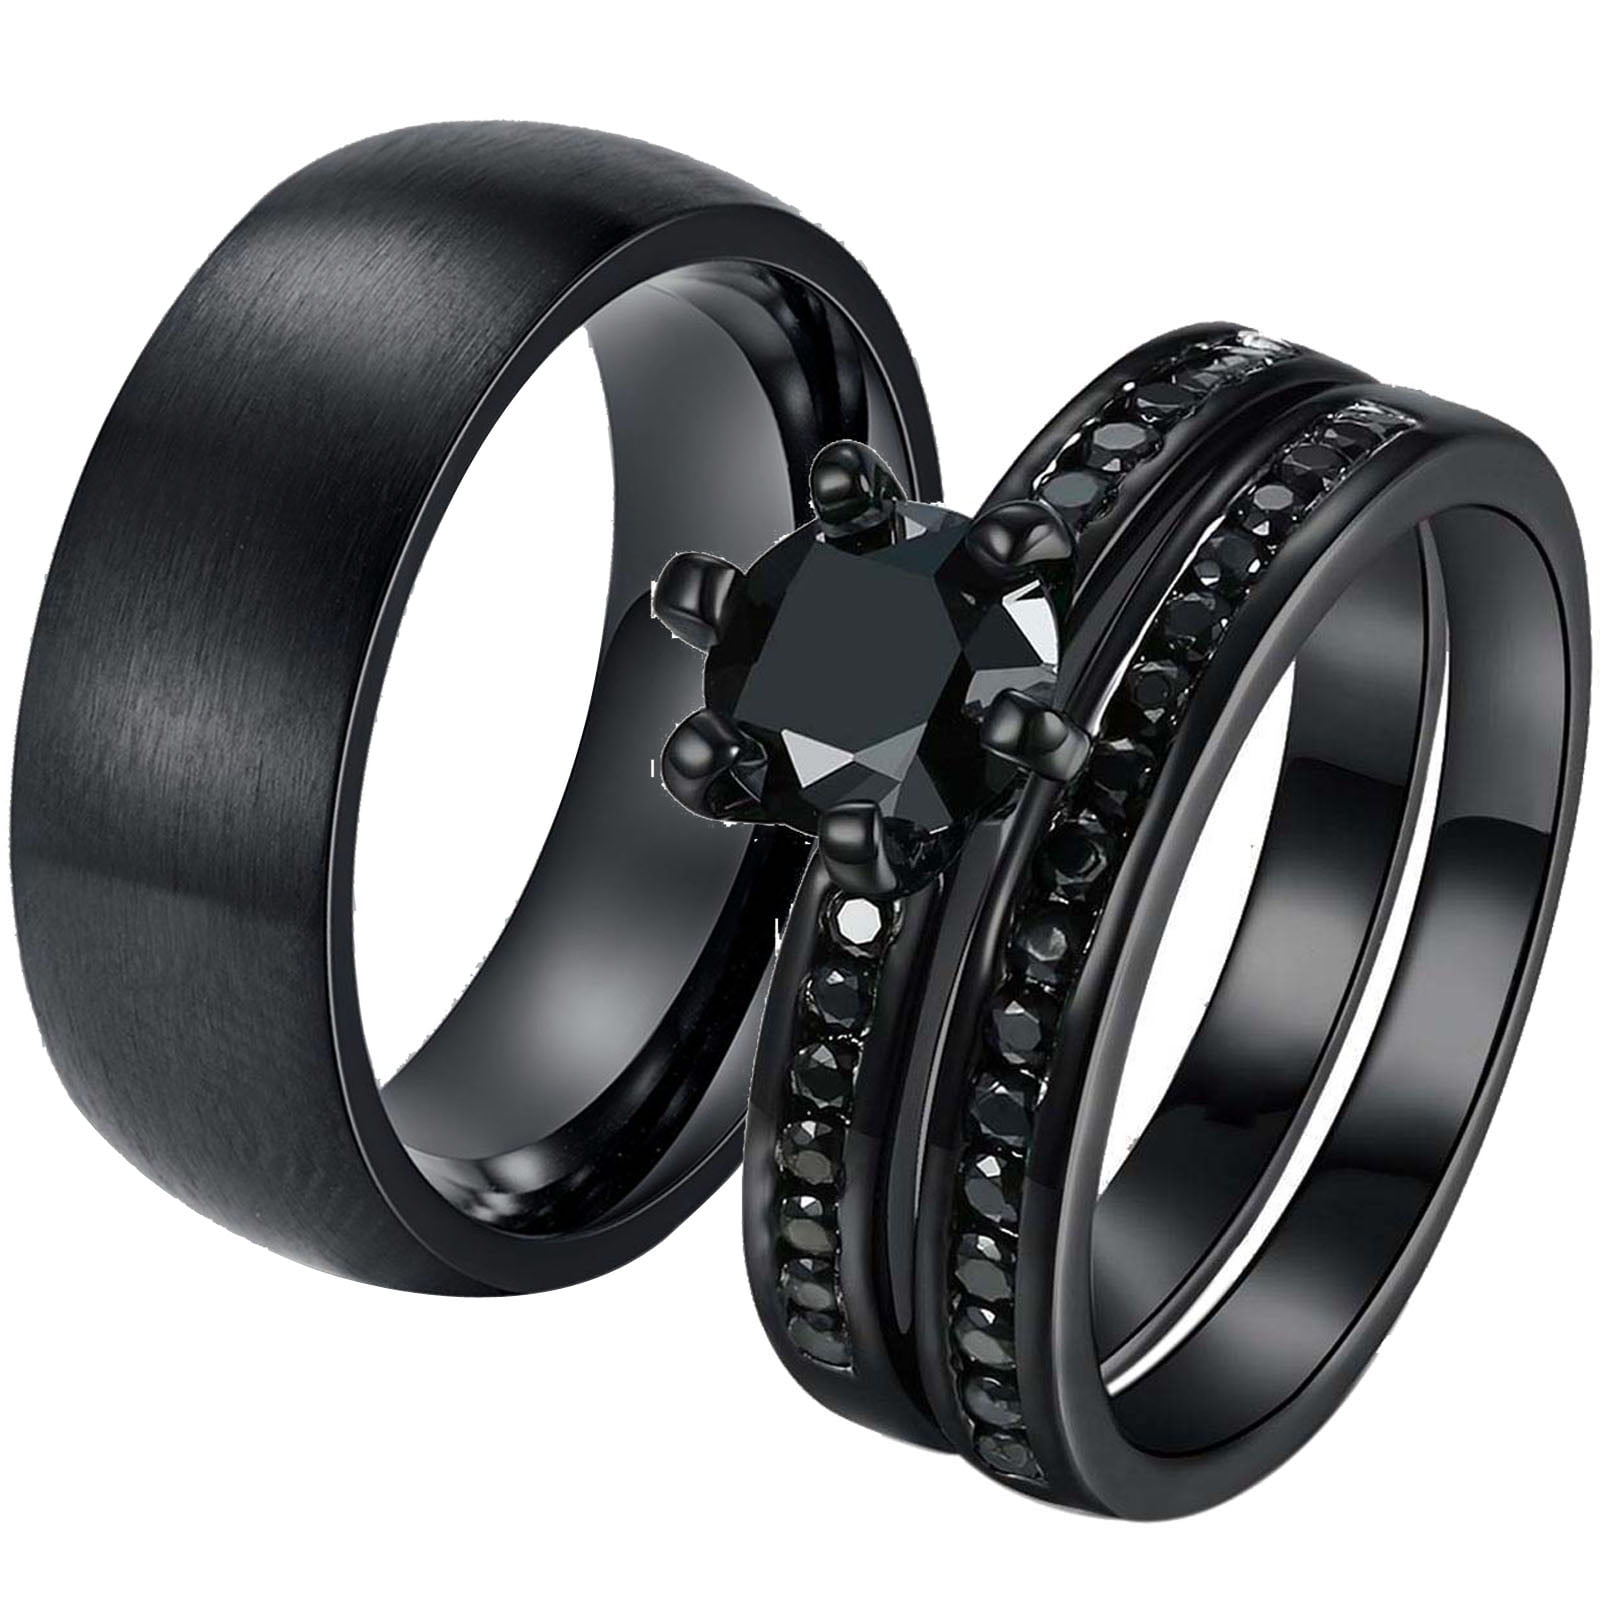 Matching black wedding rings | My Couple Goal